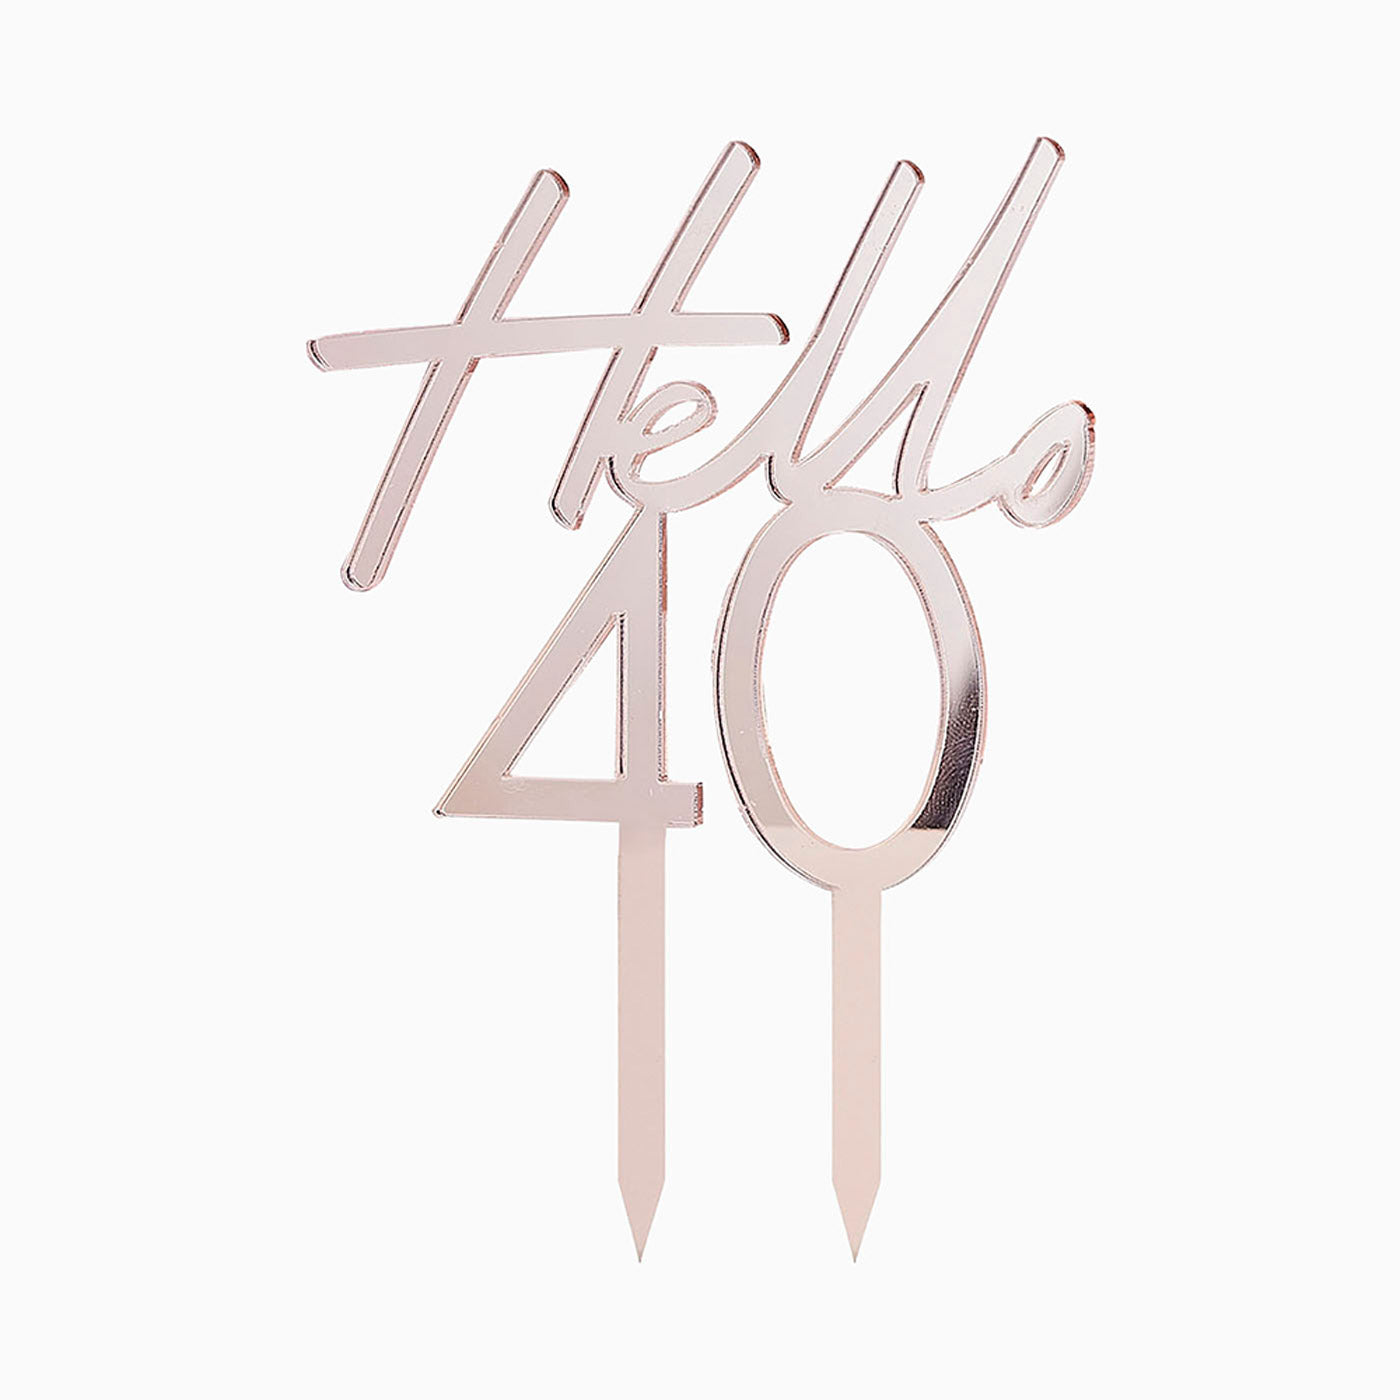 Topper Tarta "Hello 40"